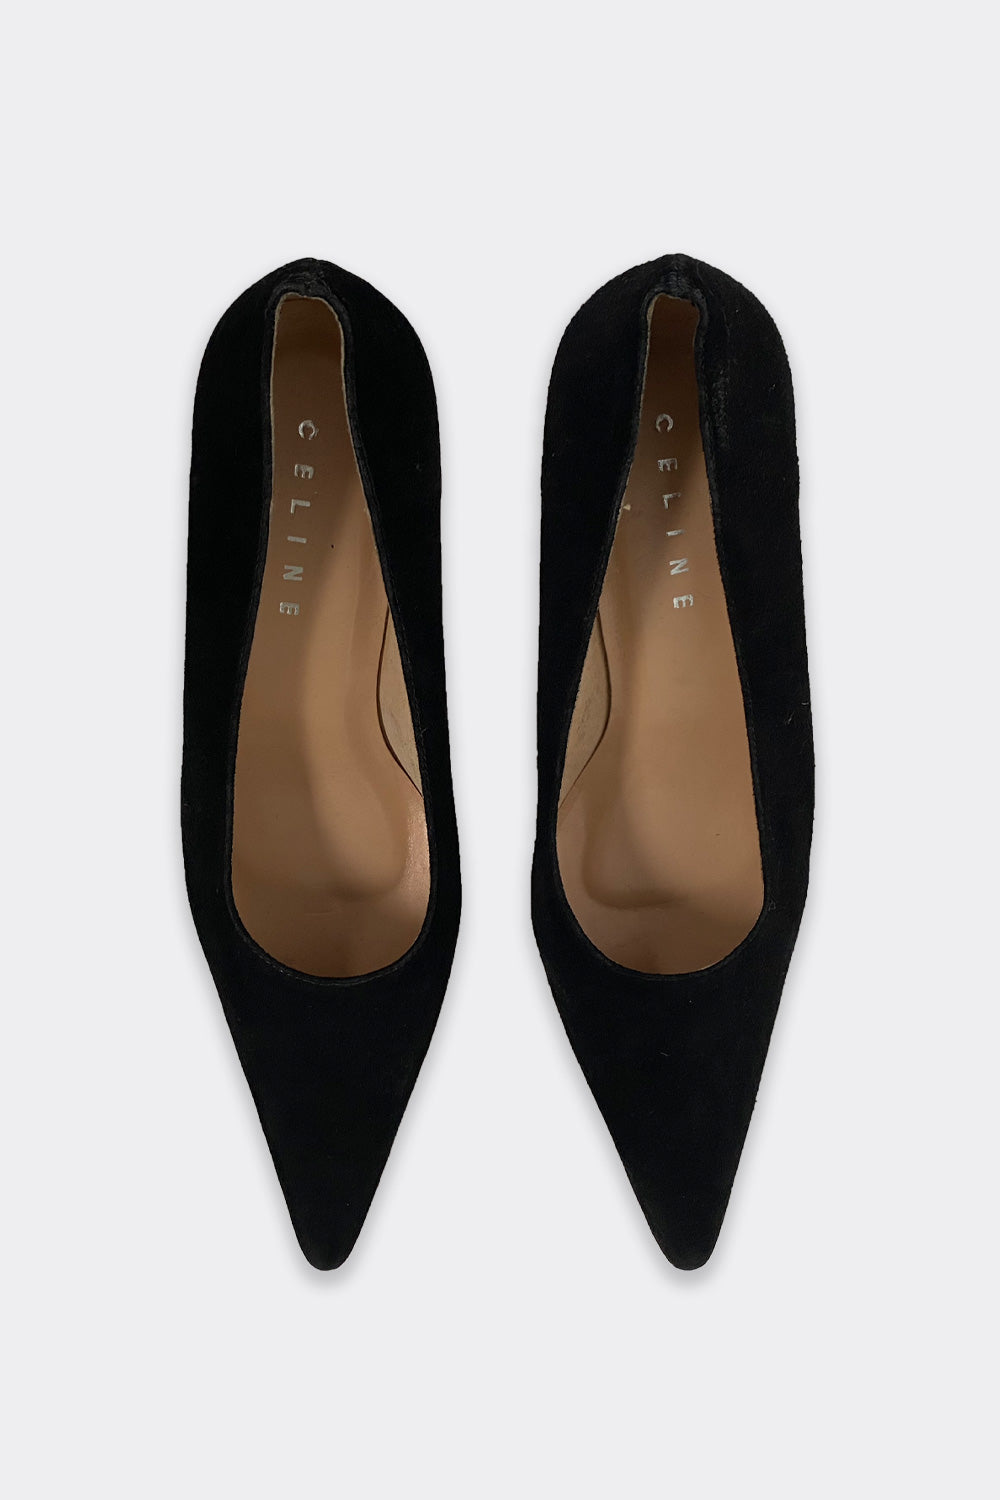 Celine Vintage Suede Court Shoes Size 37 (UK 4)